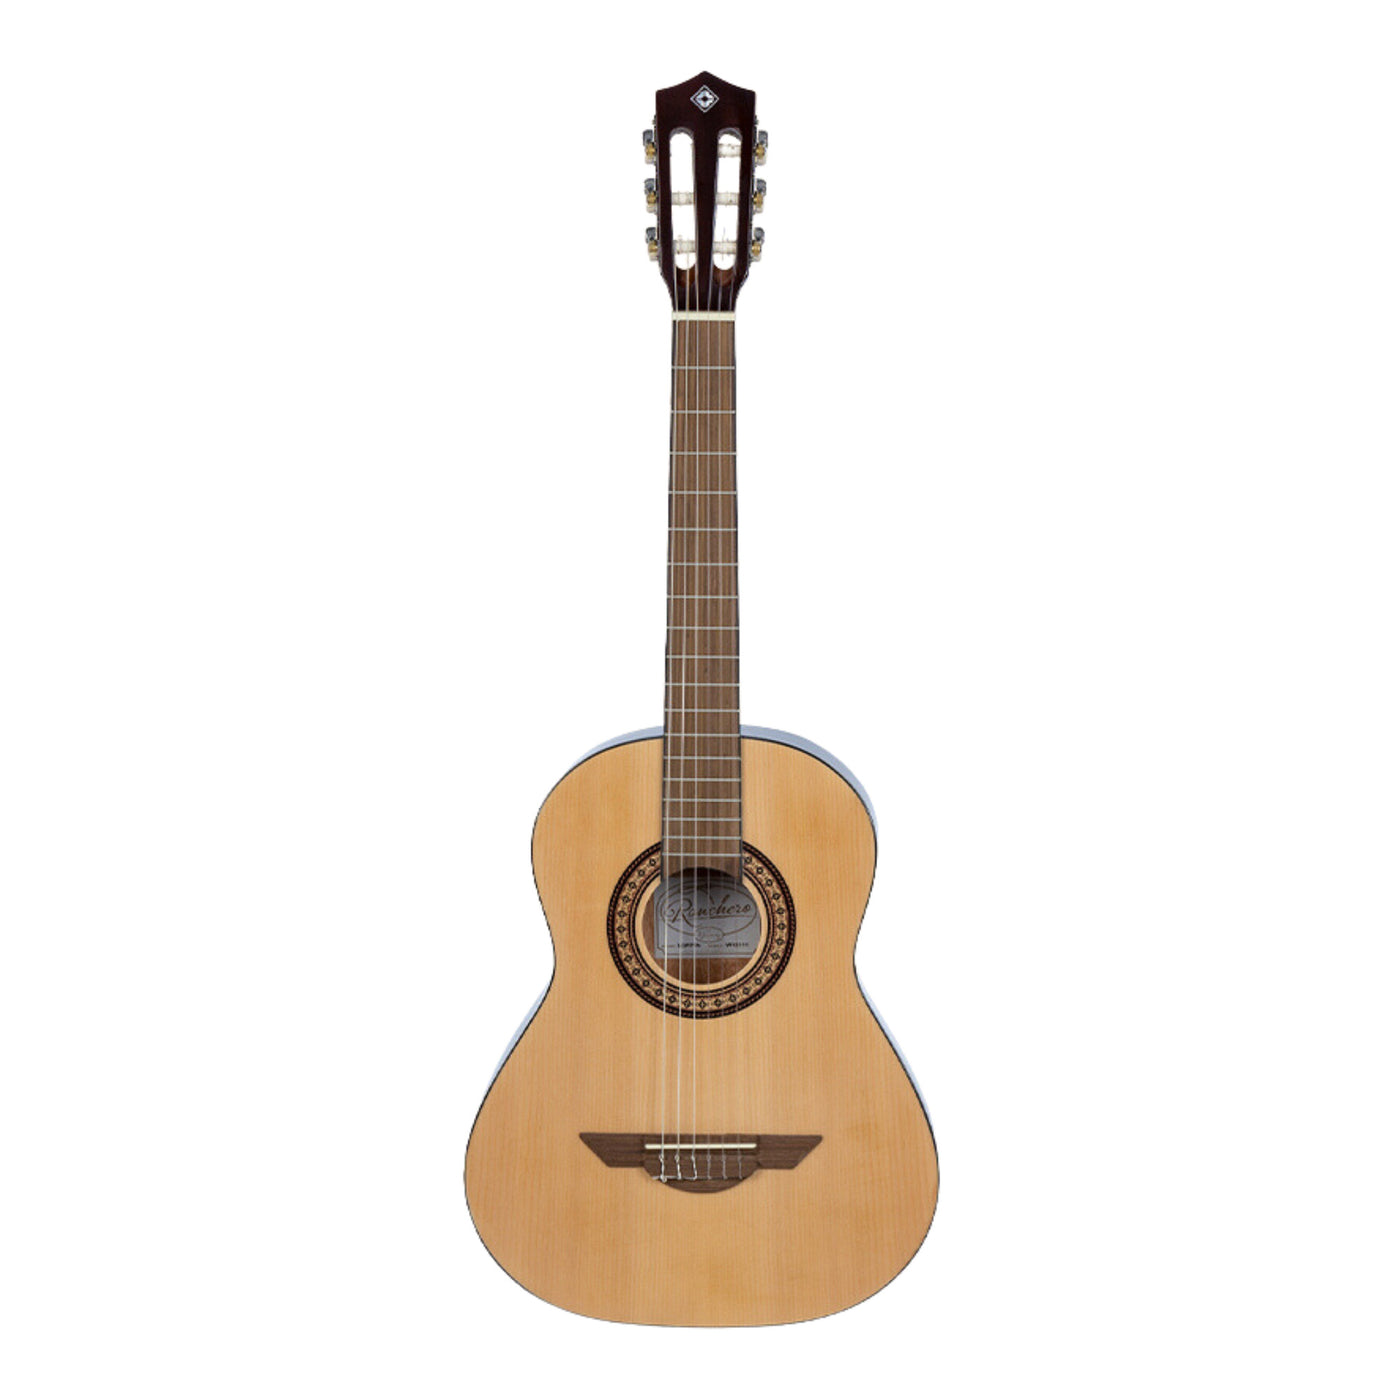 H. Jimenez LGR75N Ranchero Series 3/4 Size Nylon String Guitar with Padded Gig Bag